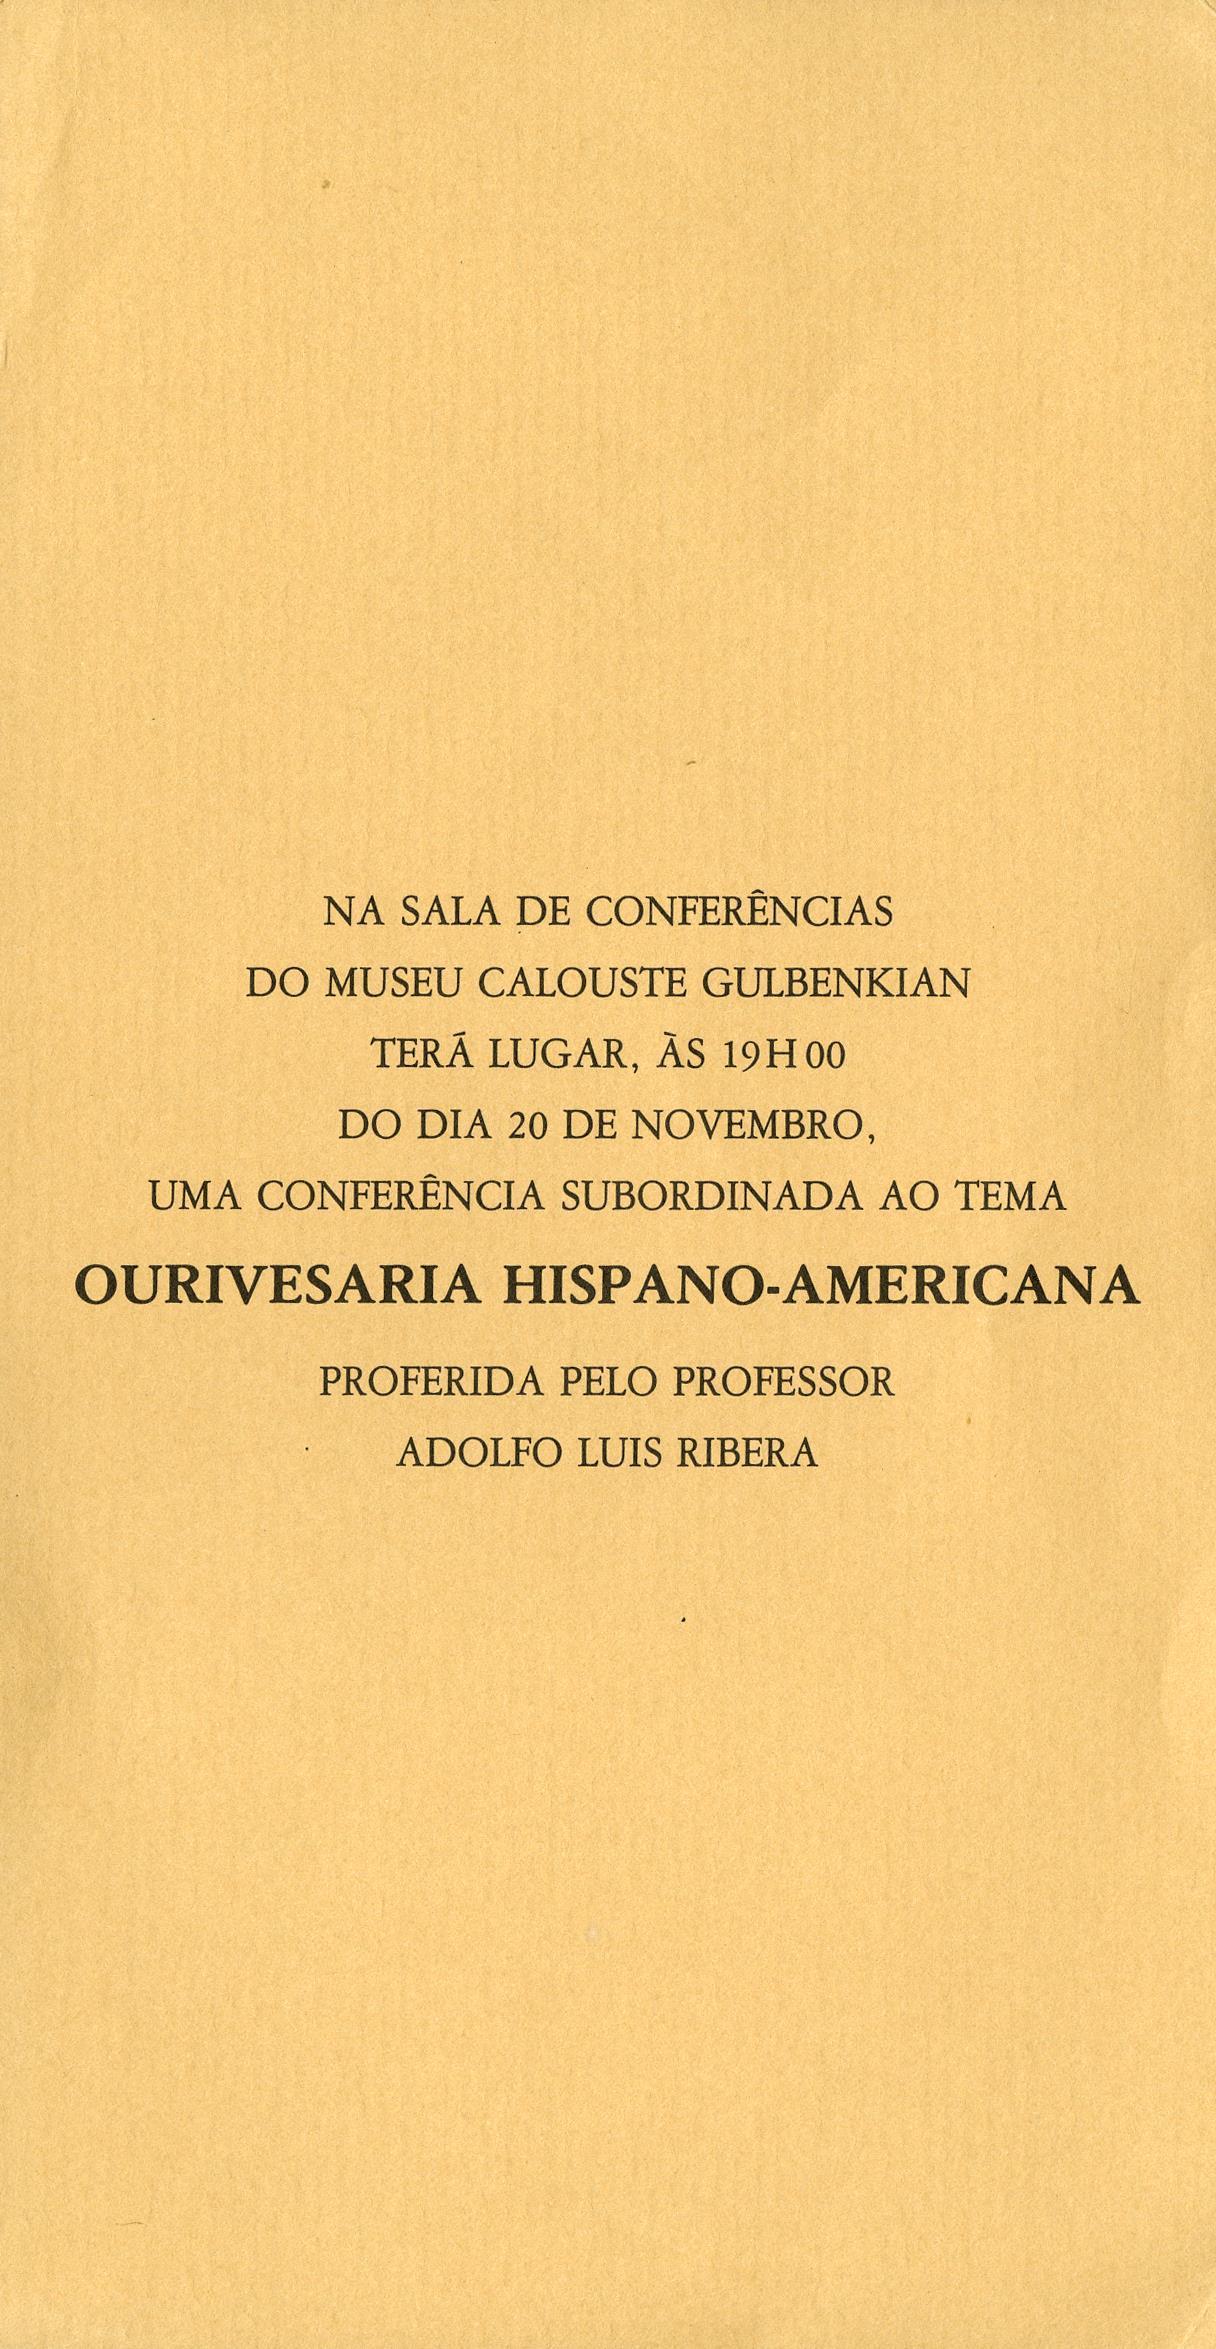 Ourivesaria Hispano-Americana [conferência por Adolfo Luis Ribera]